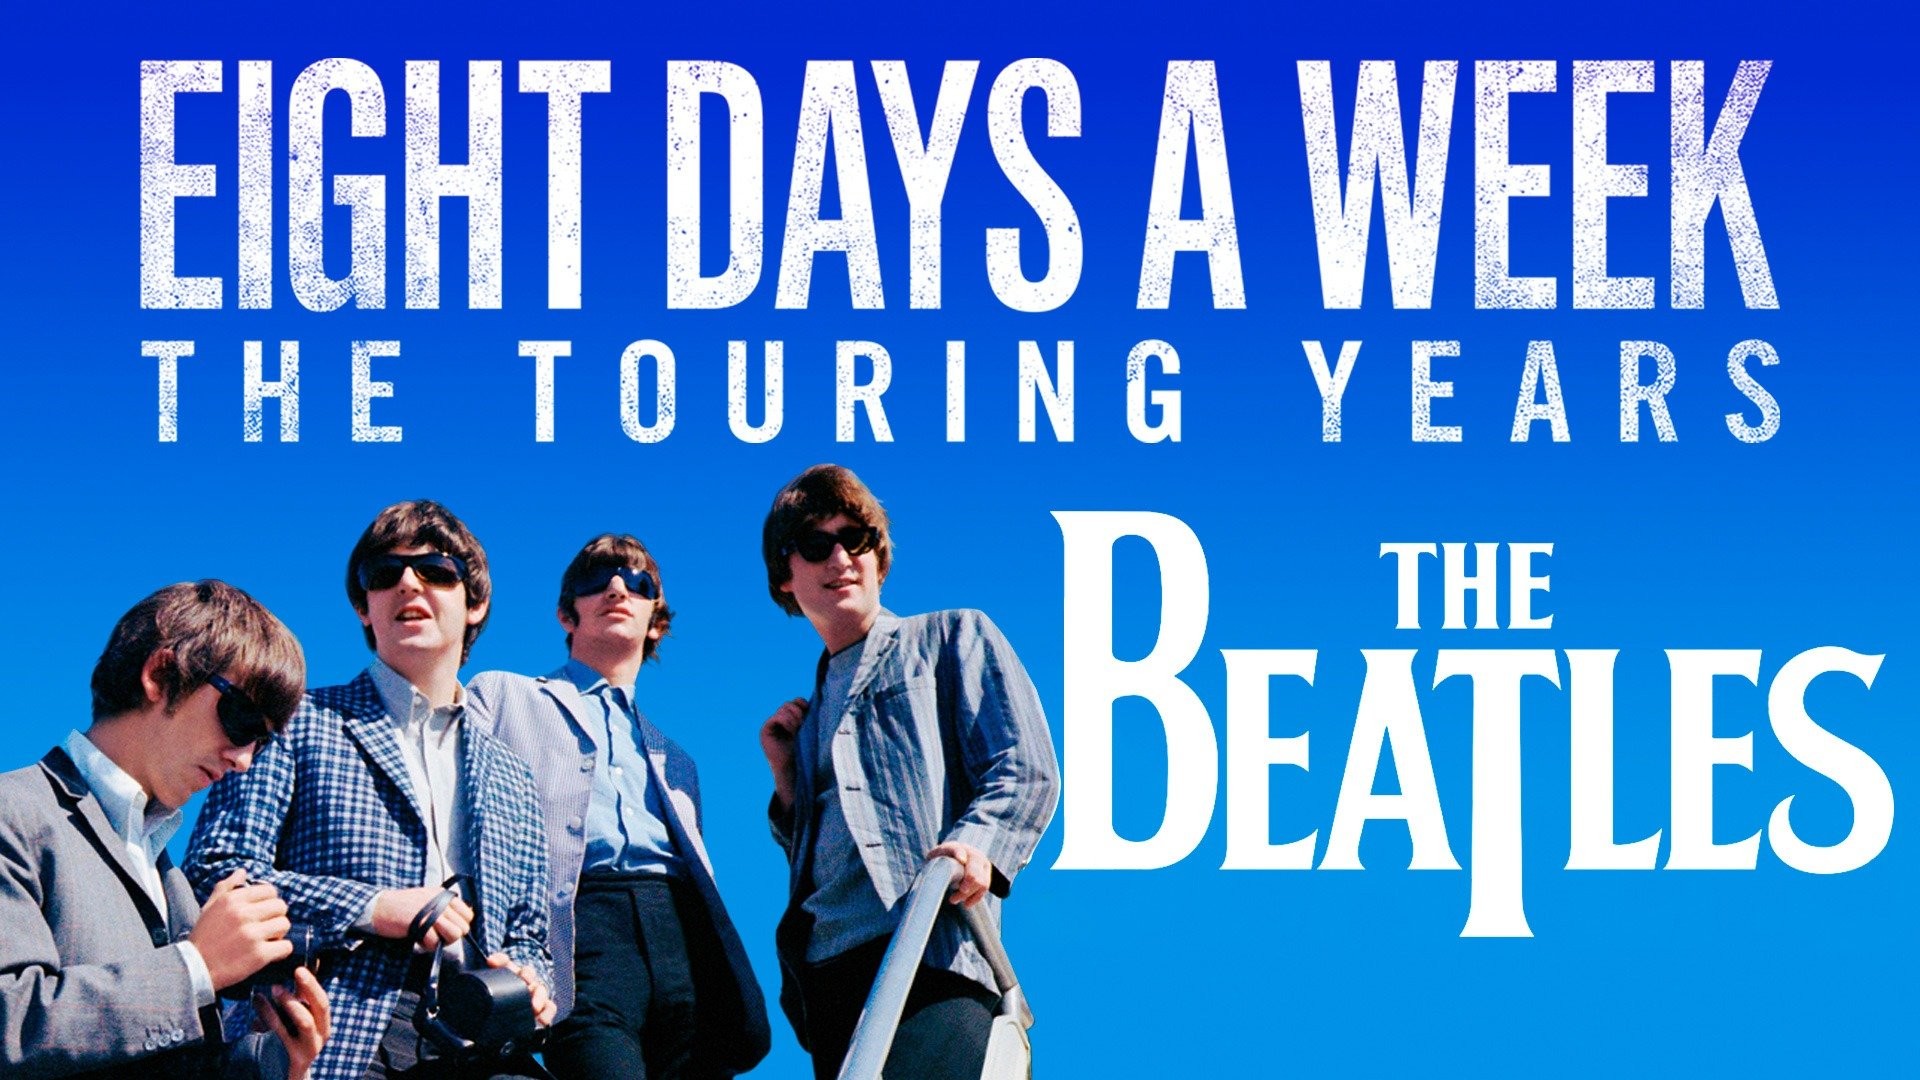 Eight Days a Week - The Beatles